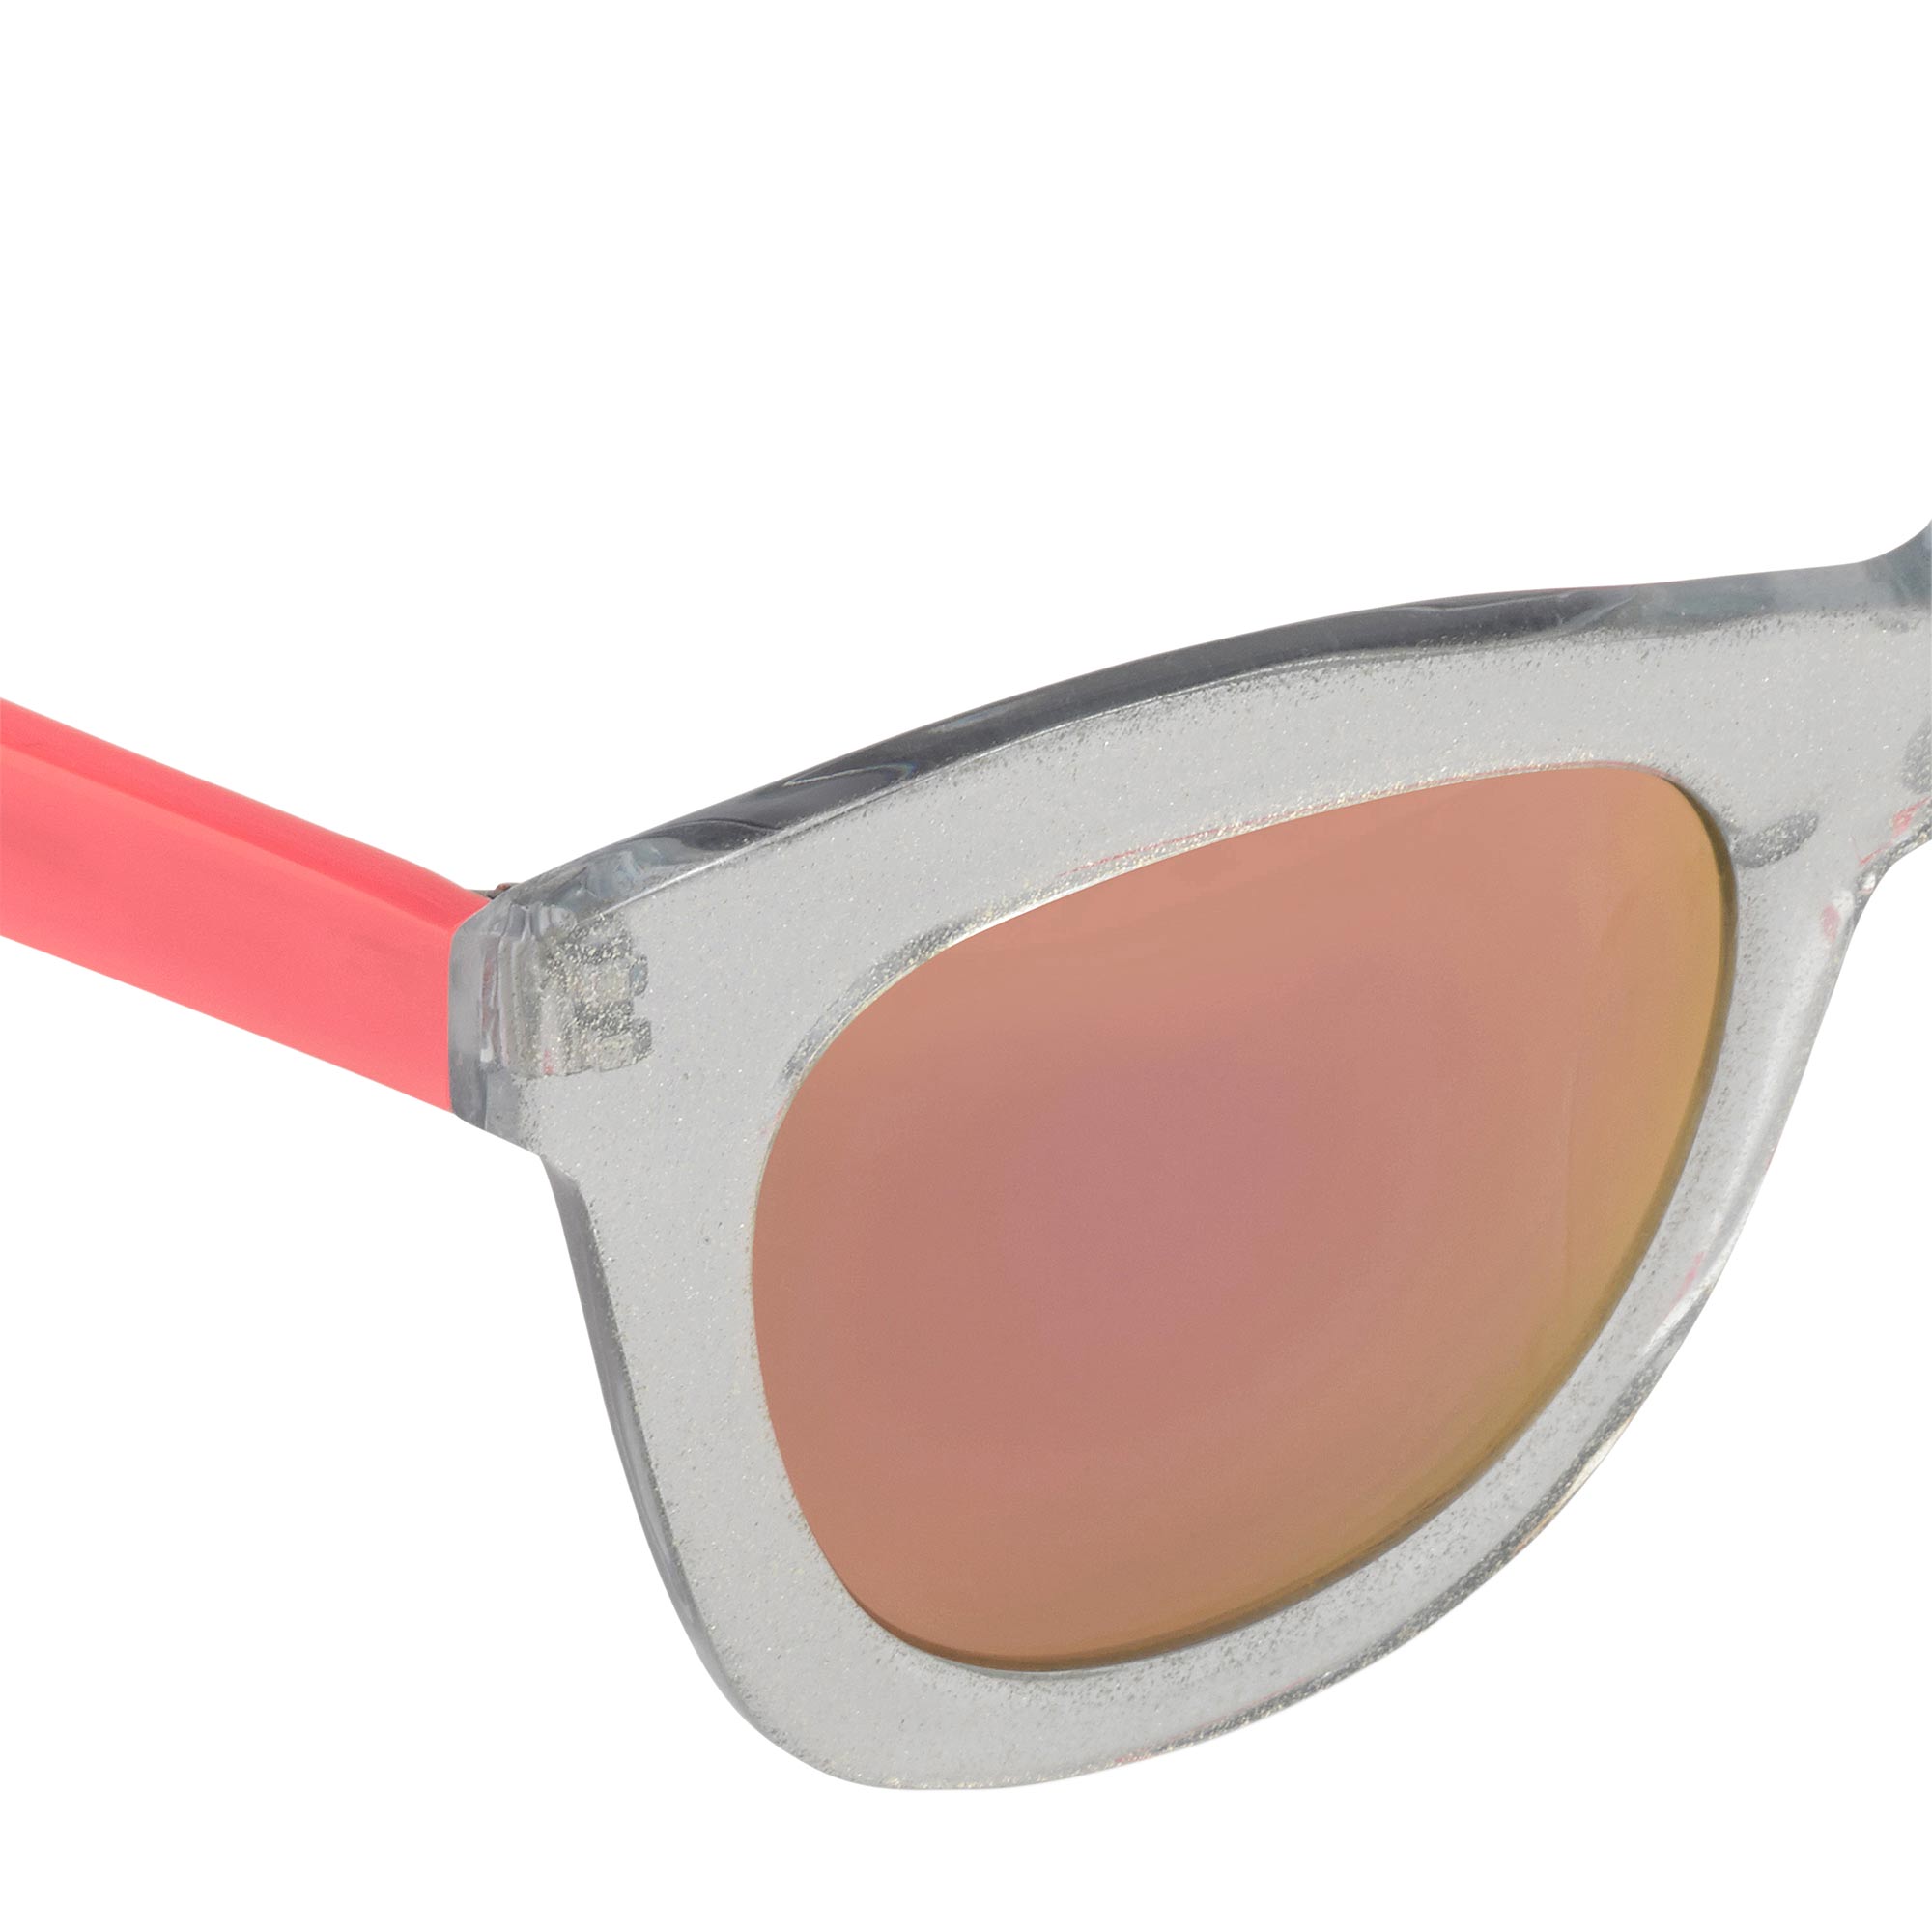 Markus Lupfer Sunglasses D-Frame Blue Glitter Neon Pink Lenses Category 3 Dark Tint ML5C6SUN - Watches & Crystals